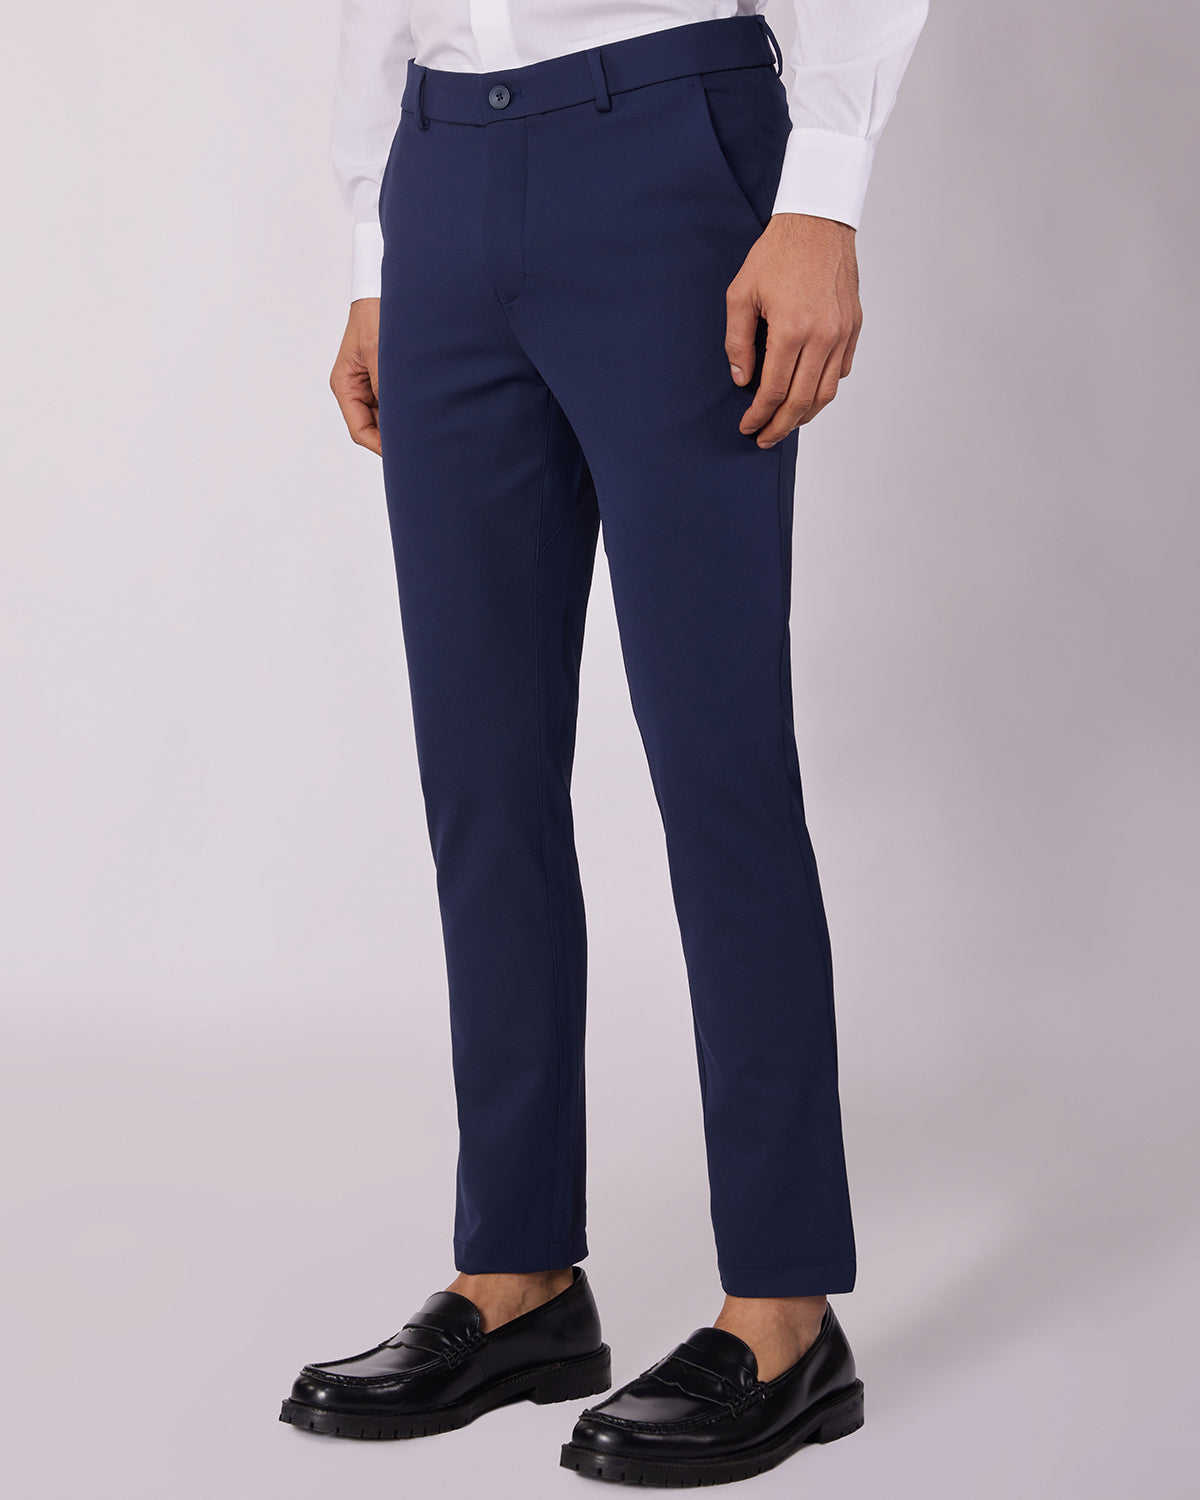 Cavani | Cavani Miami Sky Blue Suit with Navy Trousers - MENSWEARR